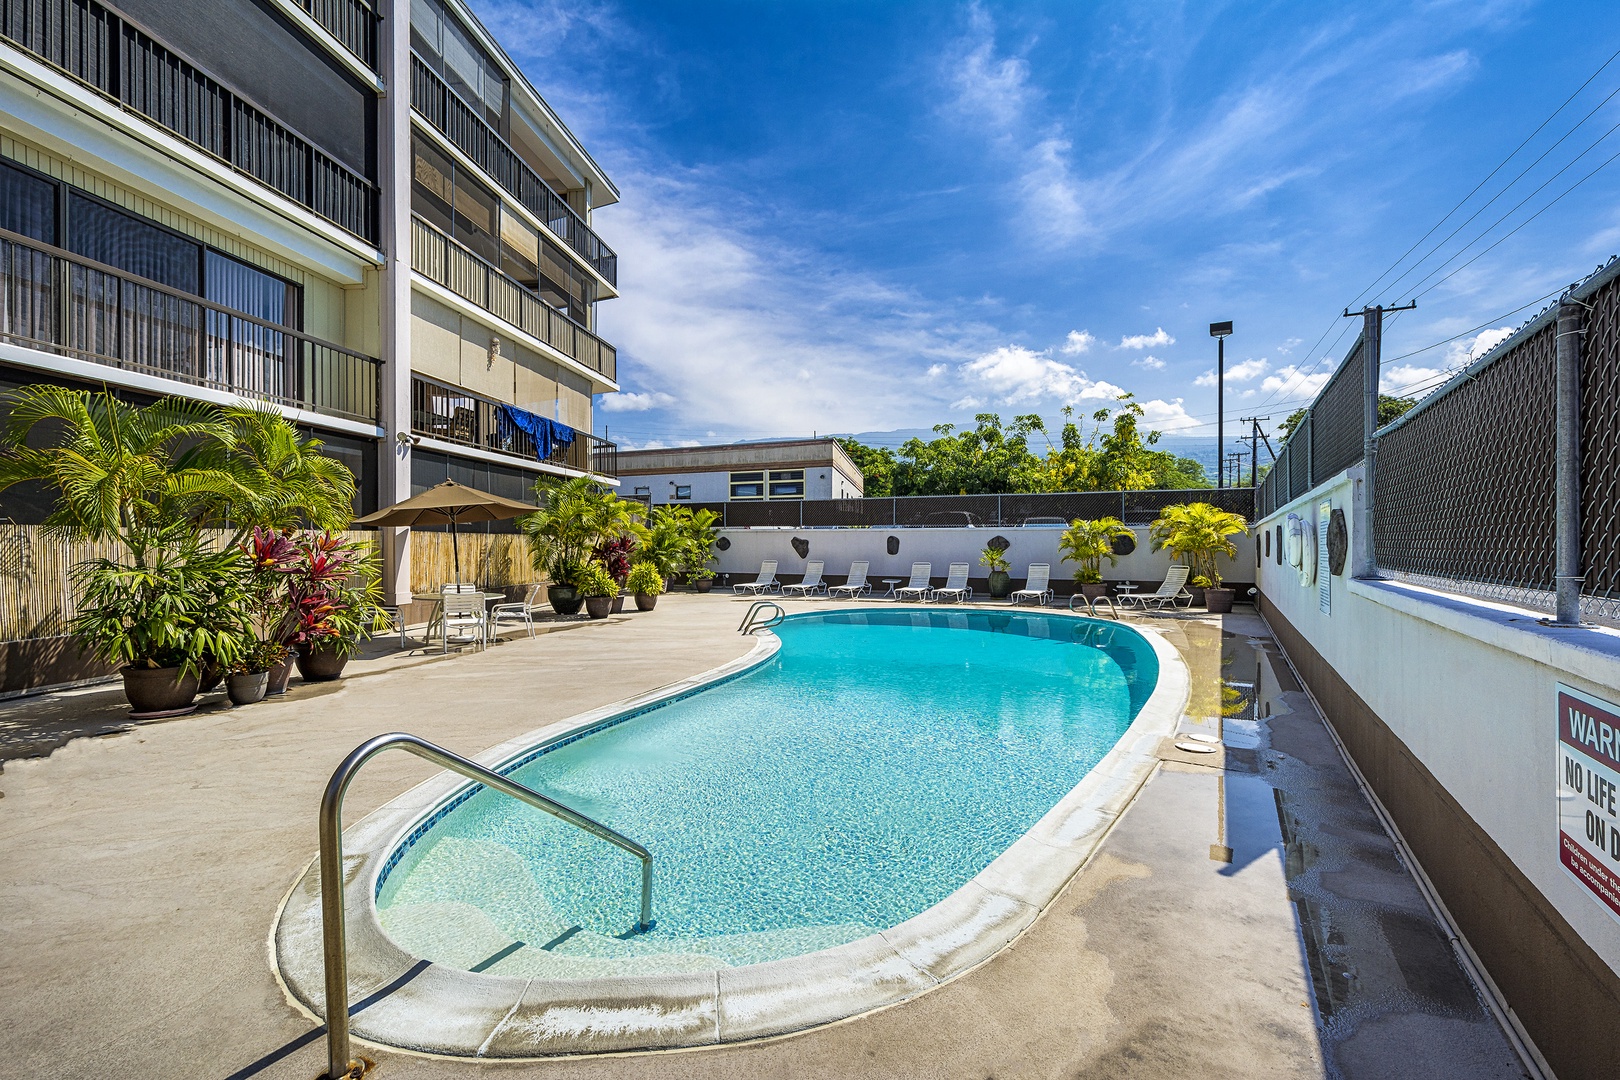 Kailua Kona Vacation Rentals, OFB Kona Plaza 112 - Kona Plaza pool